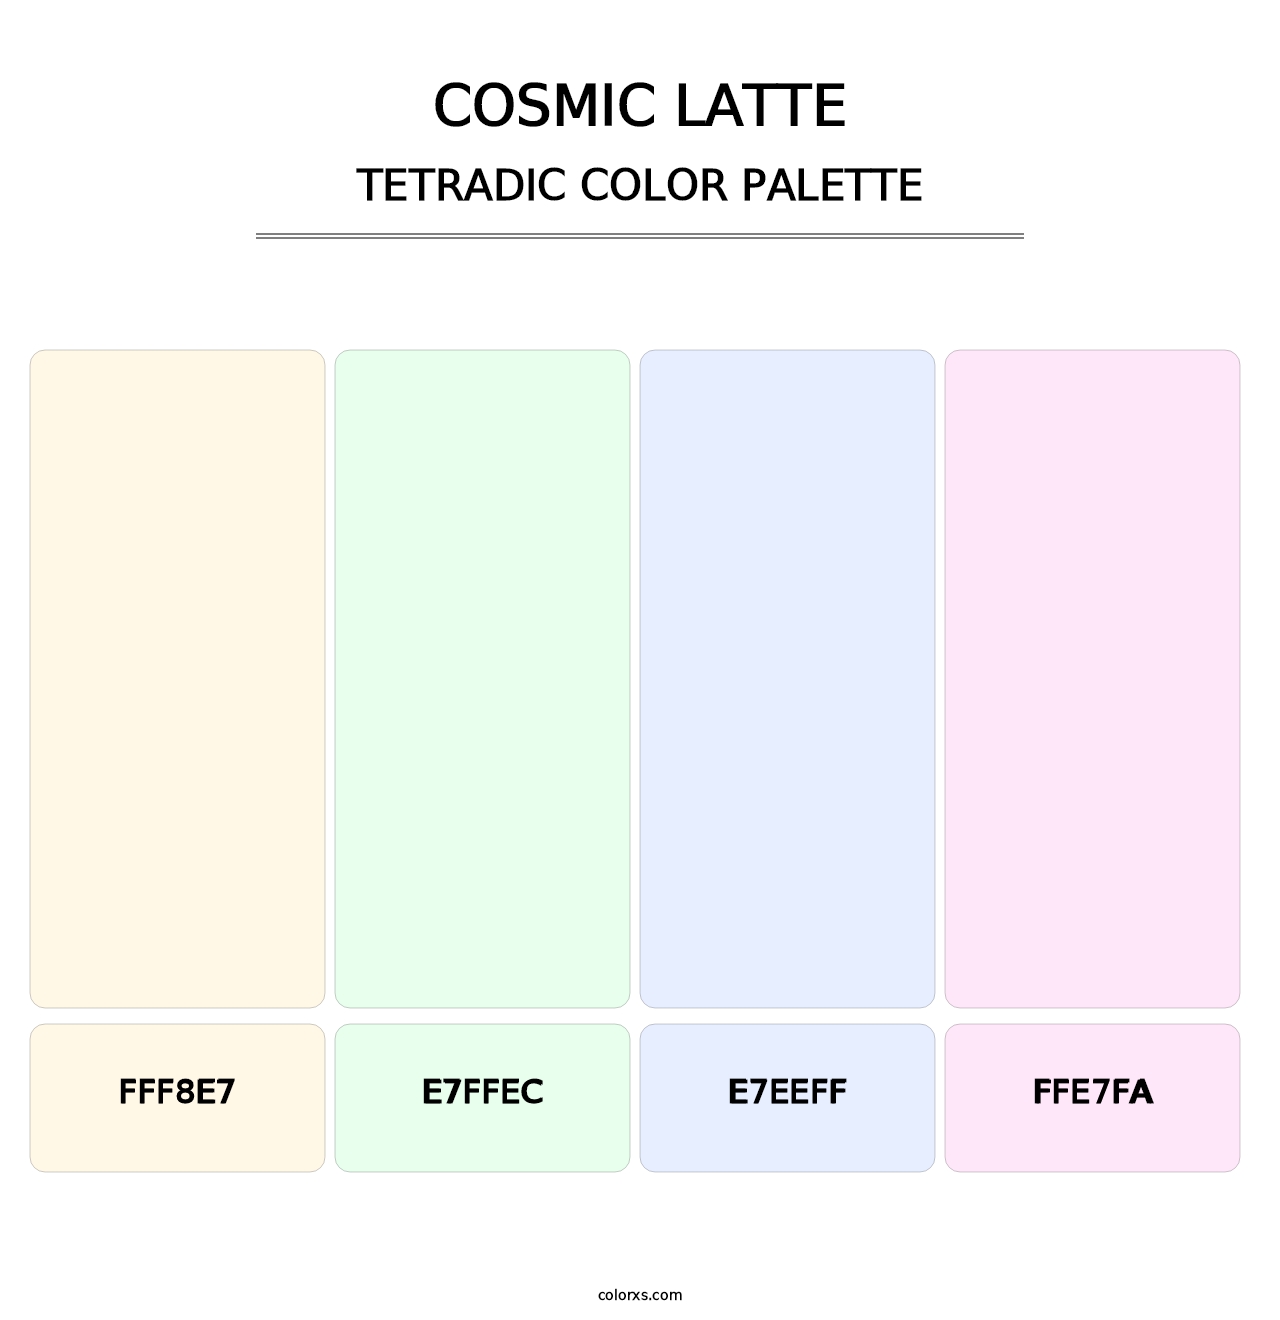 Cosmic Latte - Tetradic Color Palette